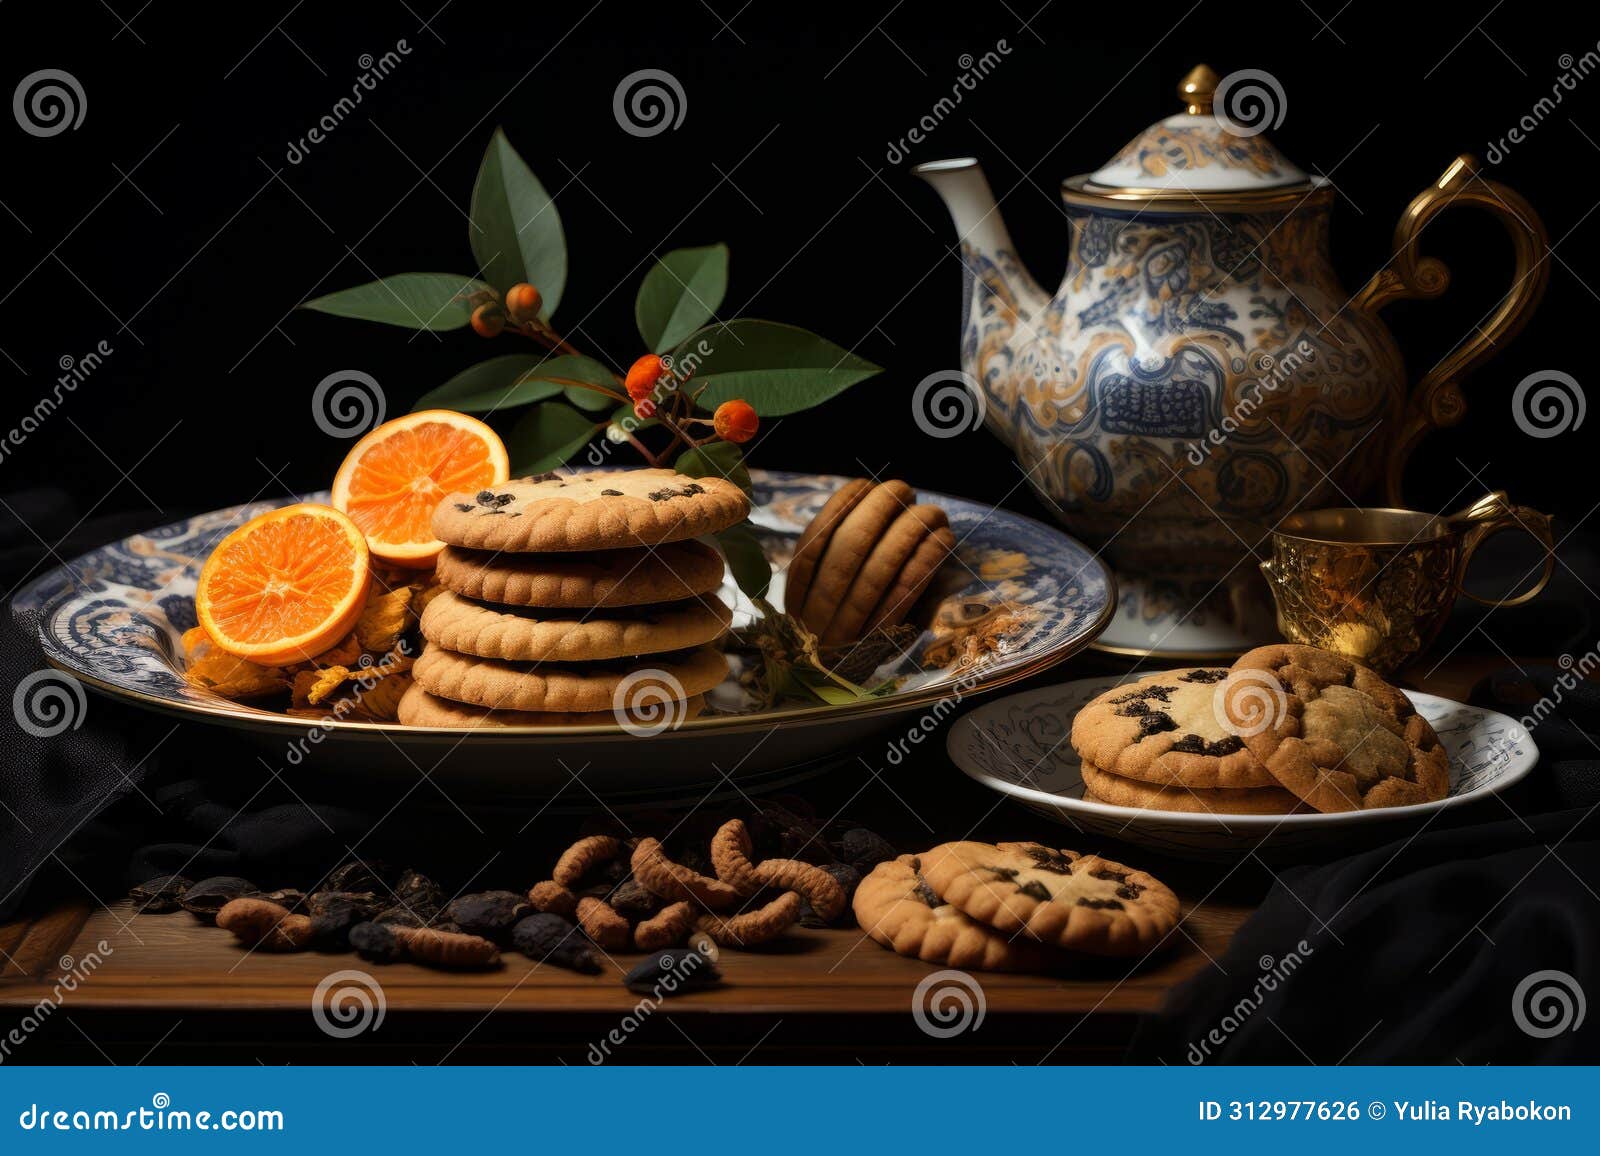 stilllife flower tea cookies. generate ai